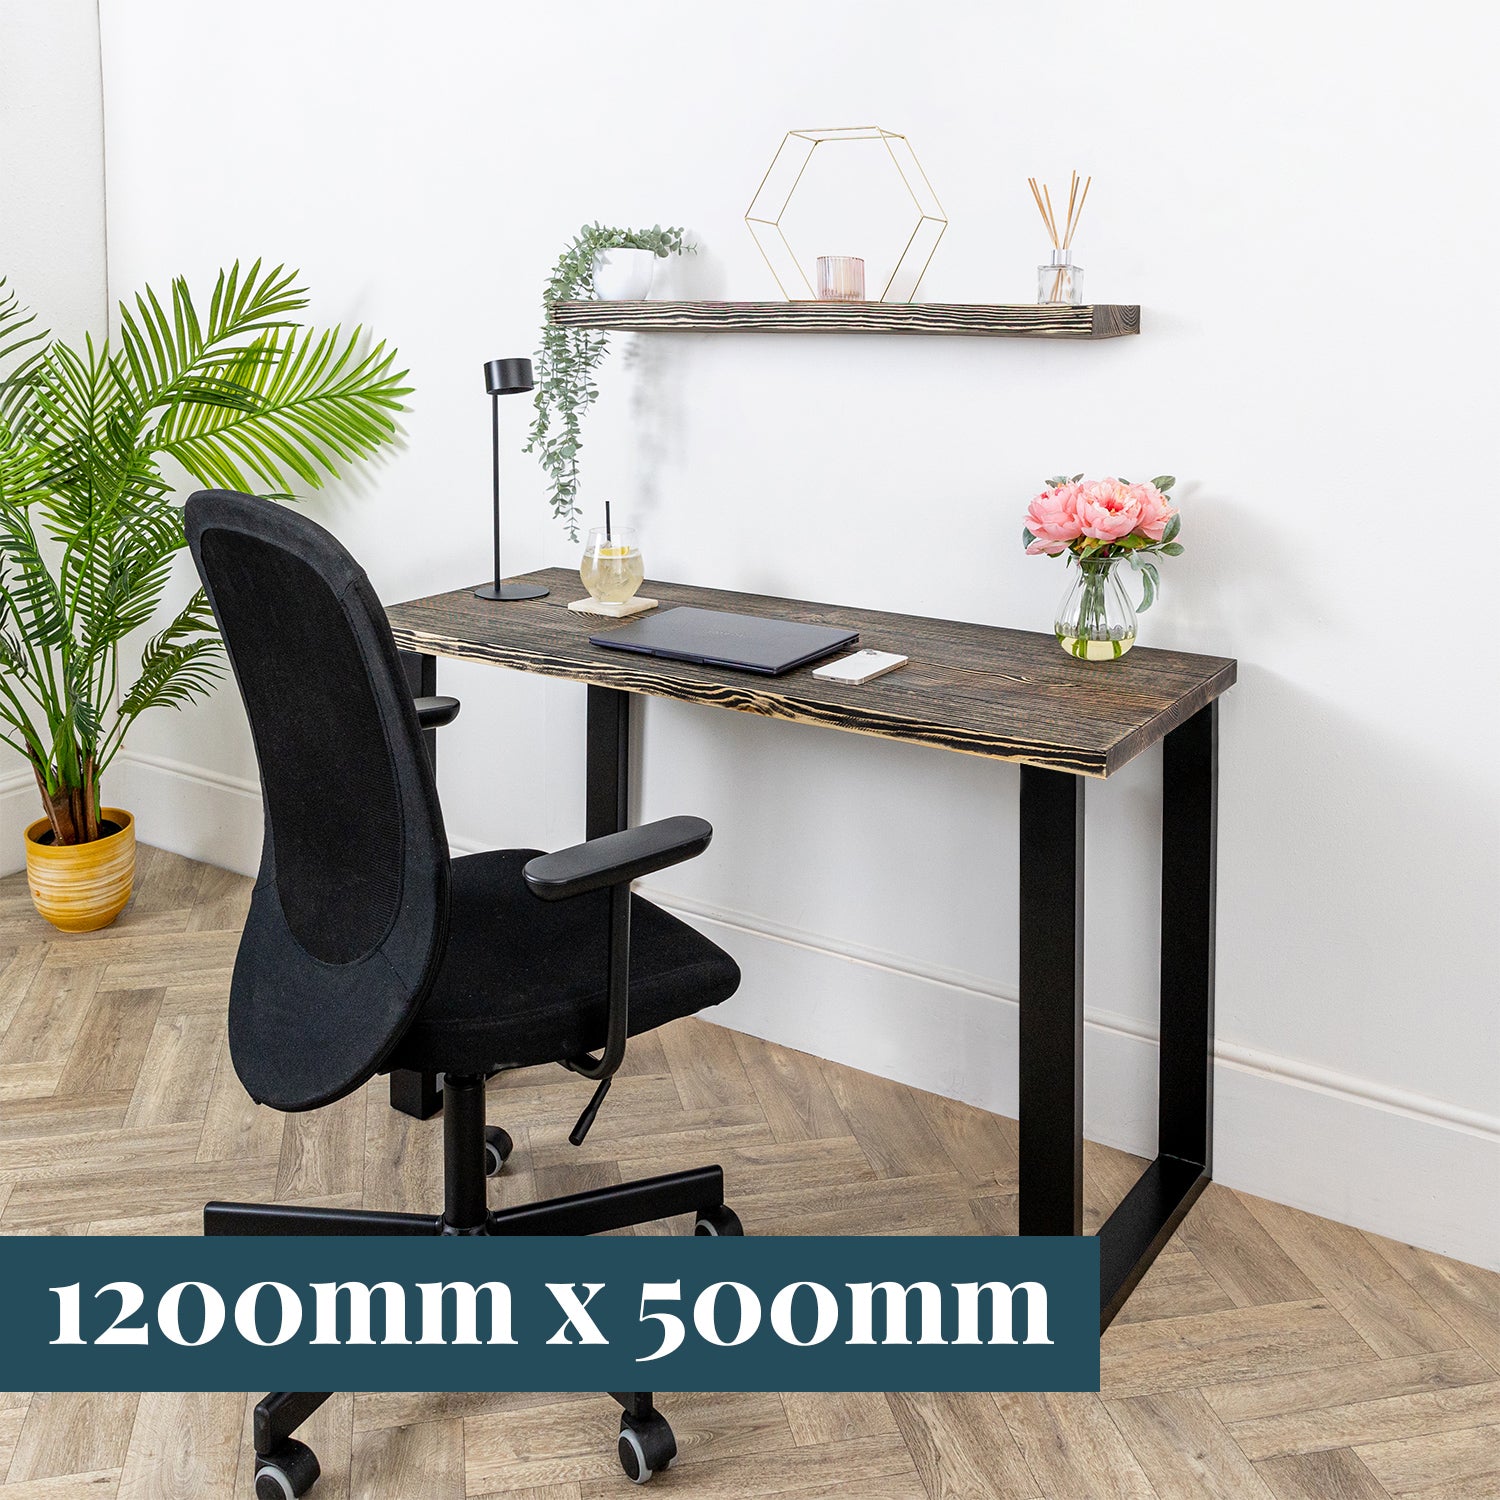 Black Wooden Desks with Industrial Metal Legs #length_1200mm depth_500mm